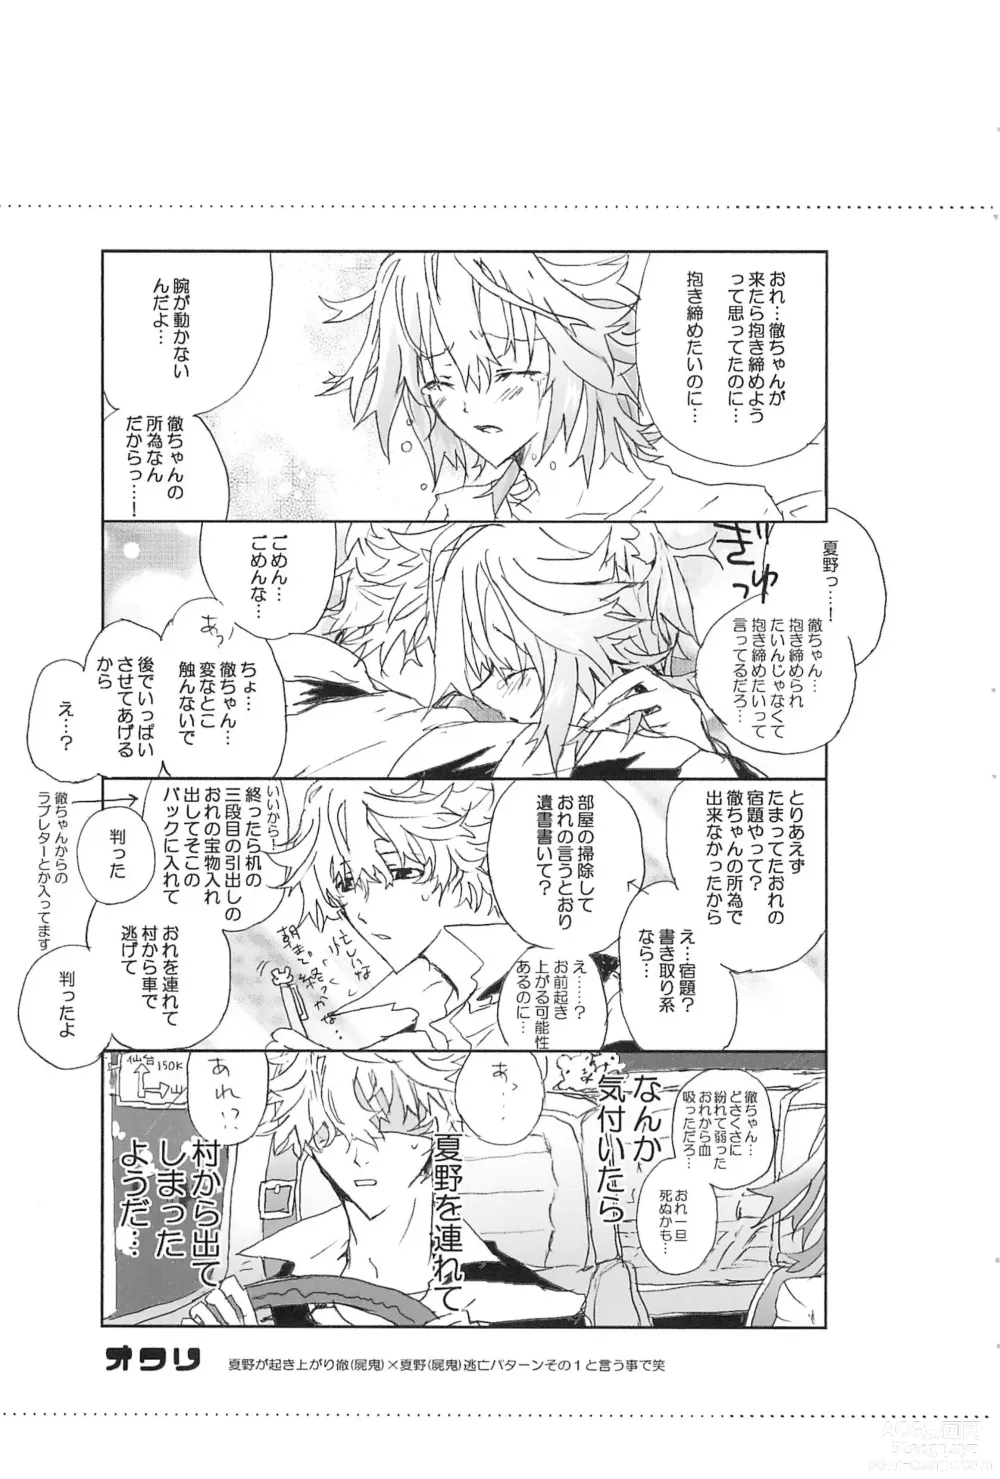 Page 23 of doujinshi Shiki-hon 6